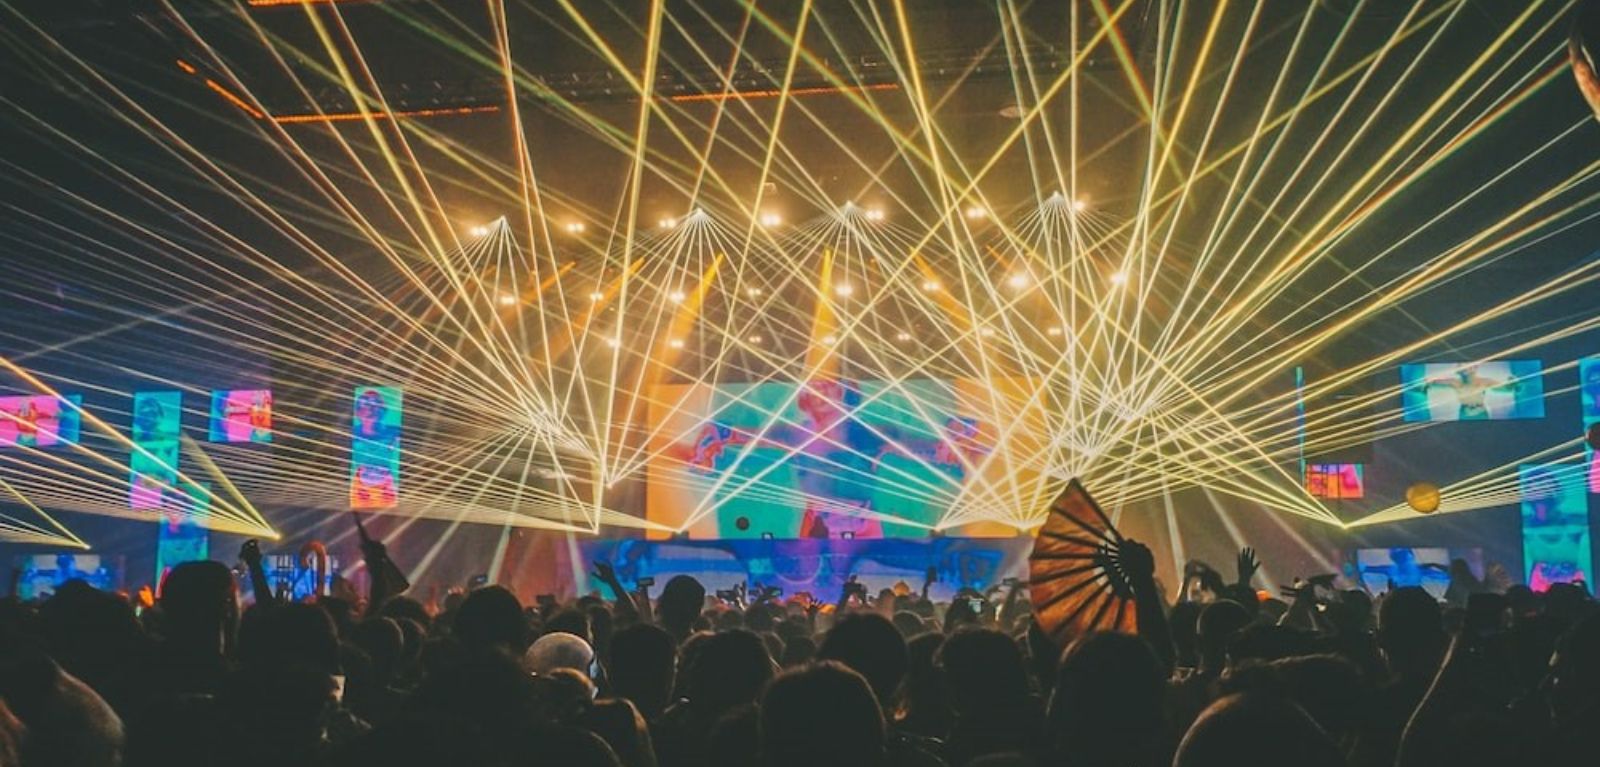 Laser lights at a festival